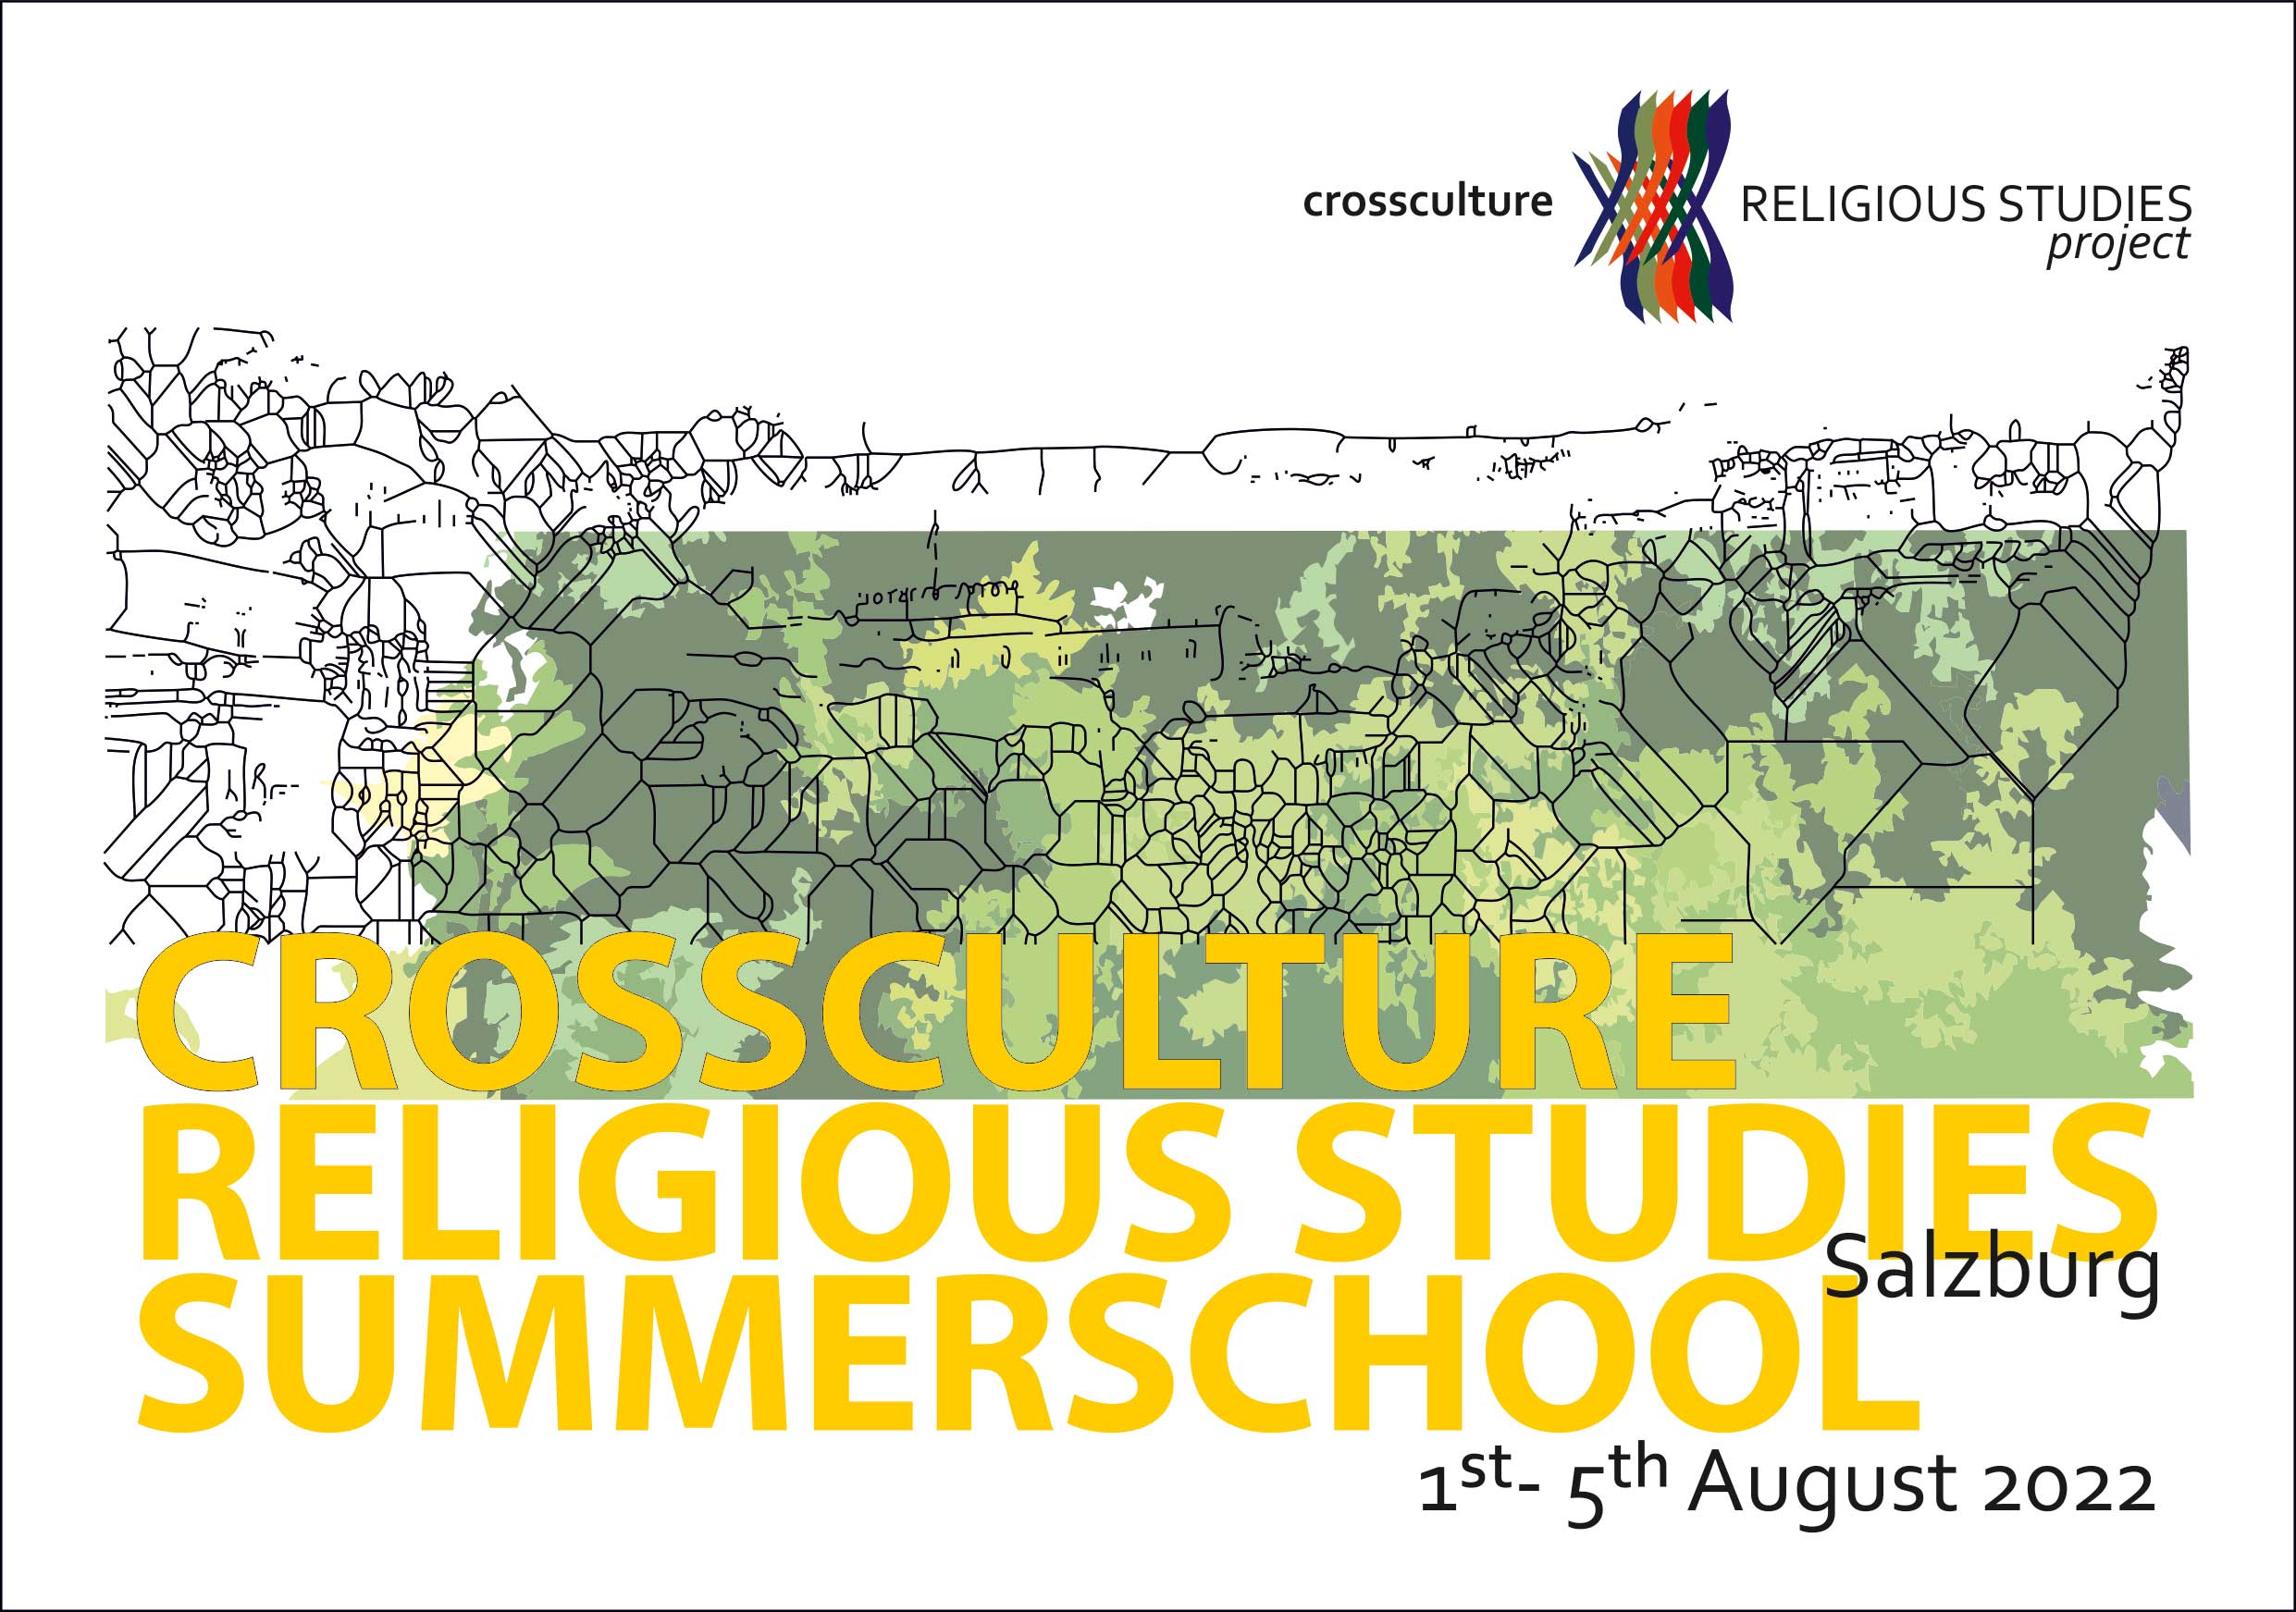 Crossculture Religious Studies Project Summer School